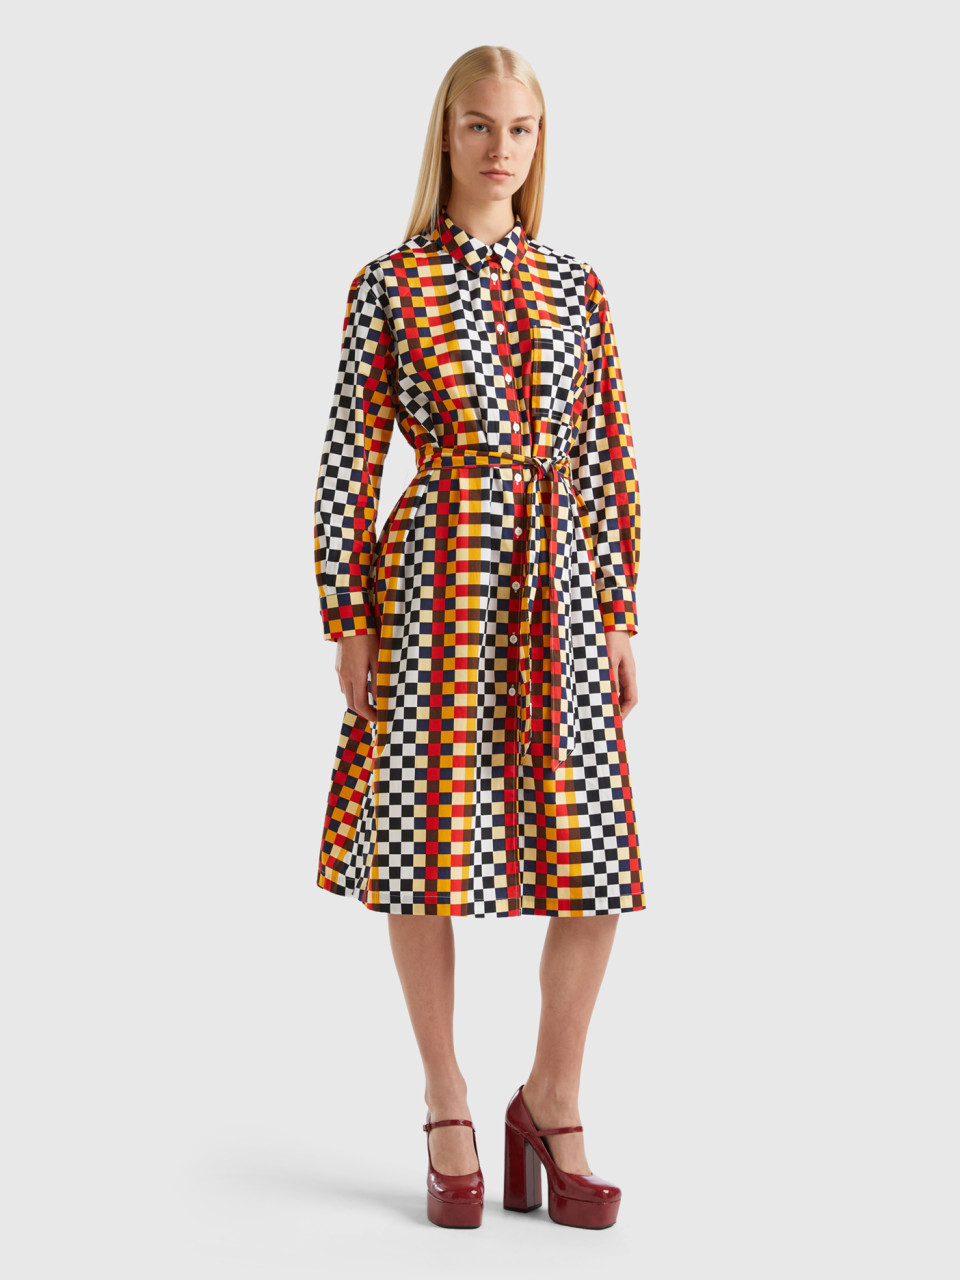 Benetton, Patterned Midi Shirt Dress, Multi-color, Women